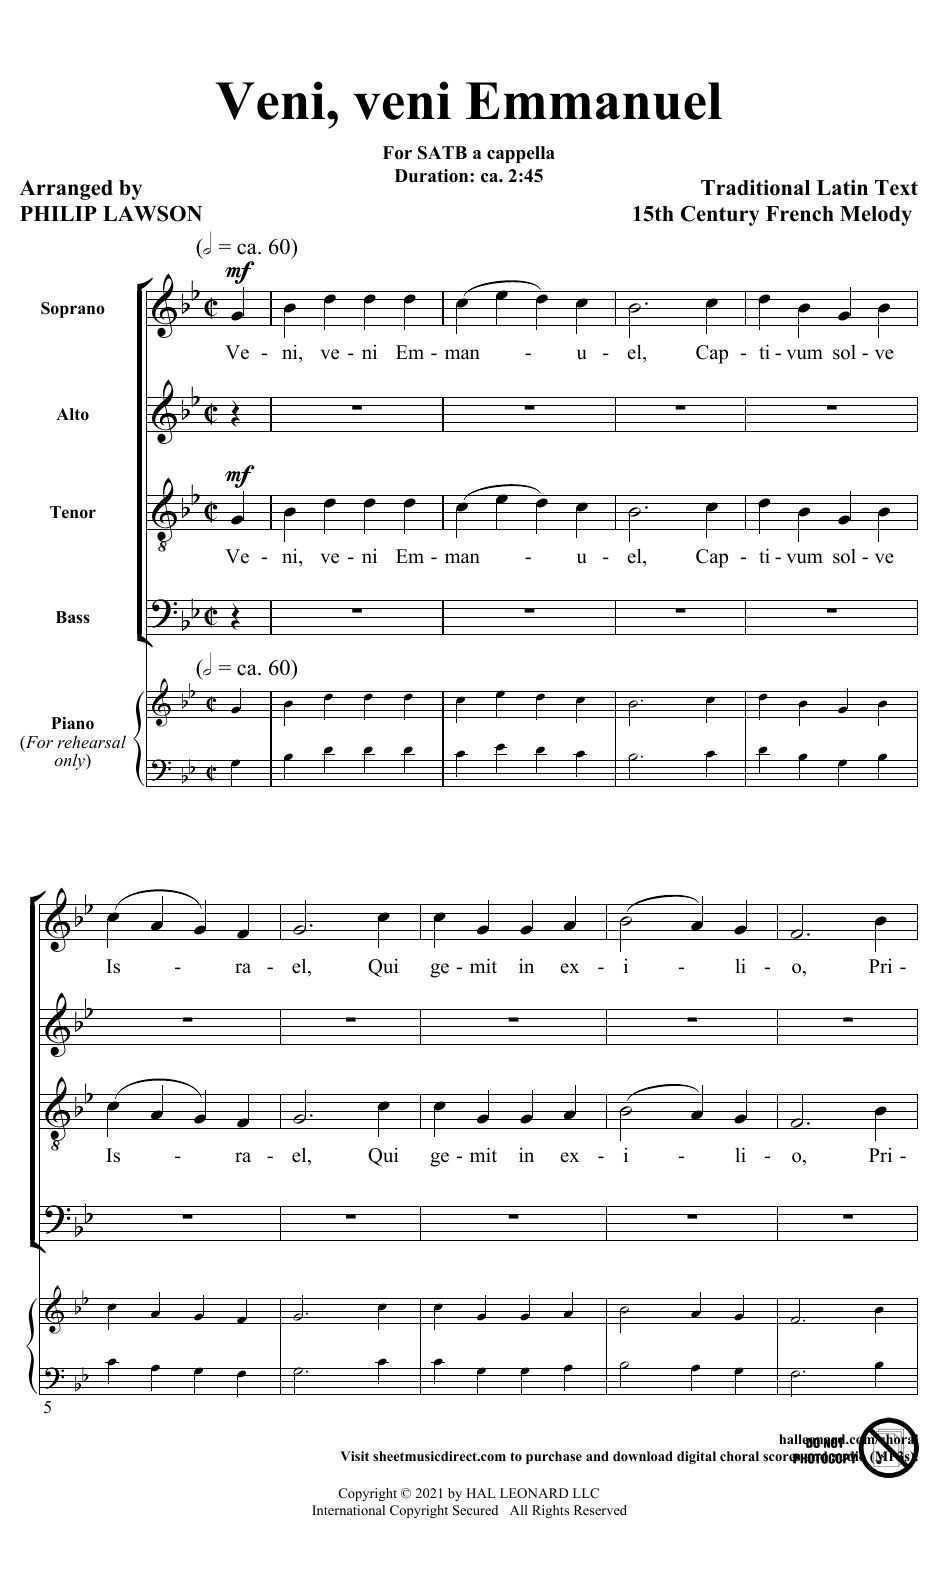 15th Century French Melody Veni, Veni Emmanuel (arr. Philip Lawson) Sheet Music Notes & Chords for SATB Choir - Download or Print PDF